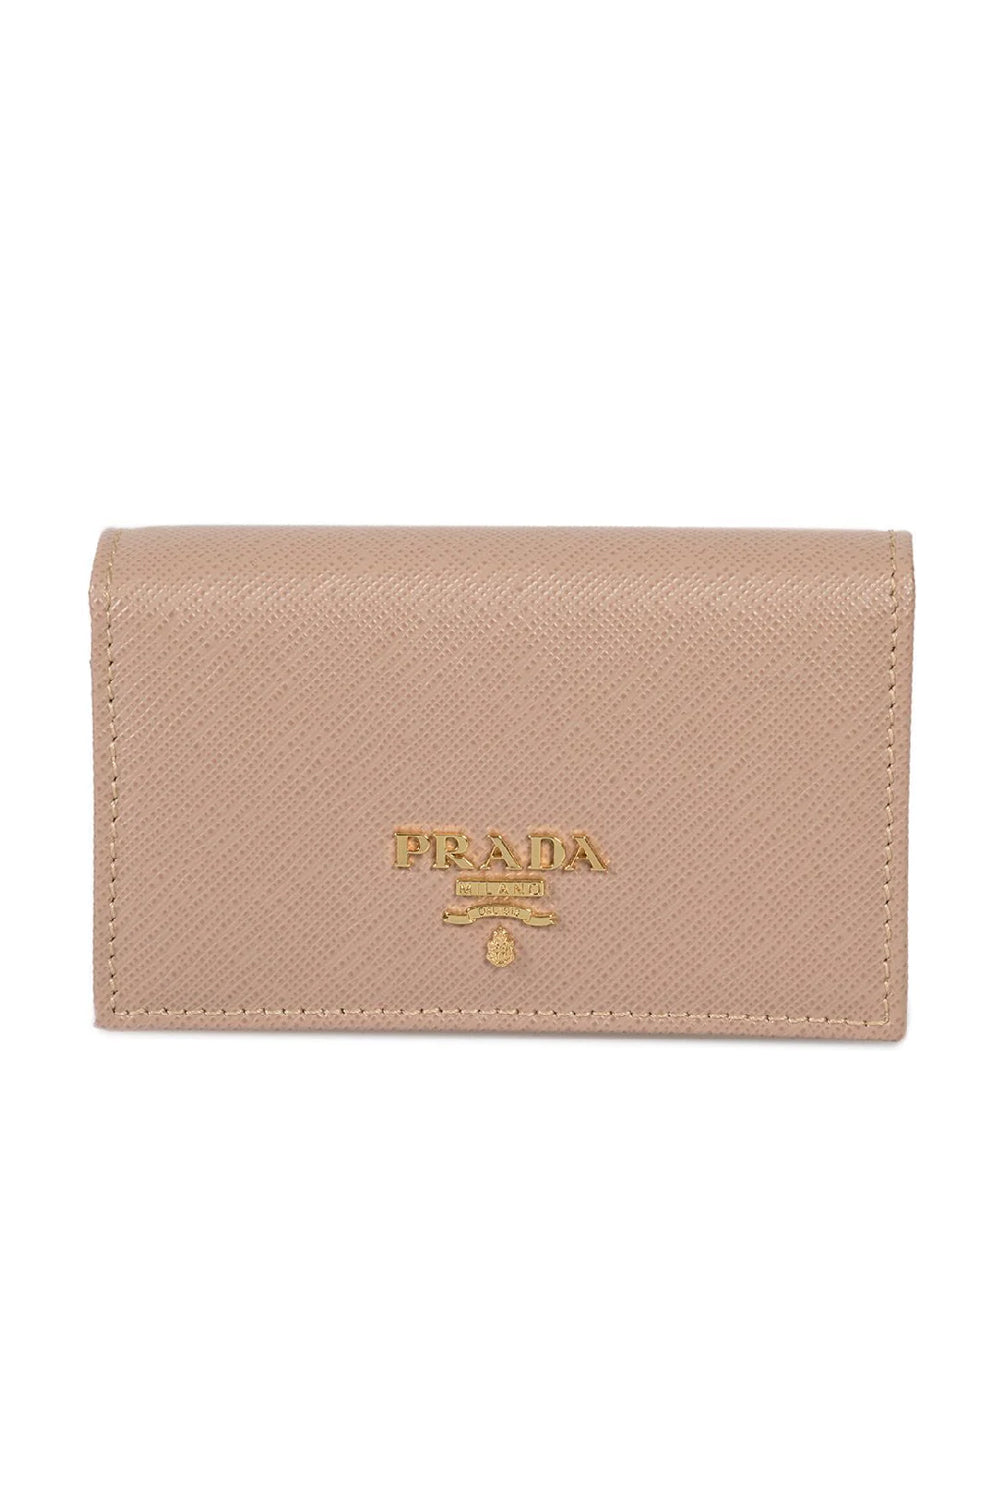 Prada Cammeo Saffiano Leather Credit Card Holder Wallet